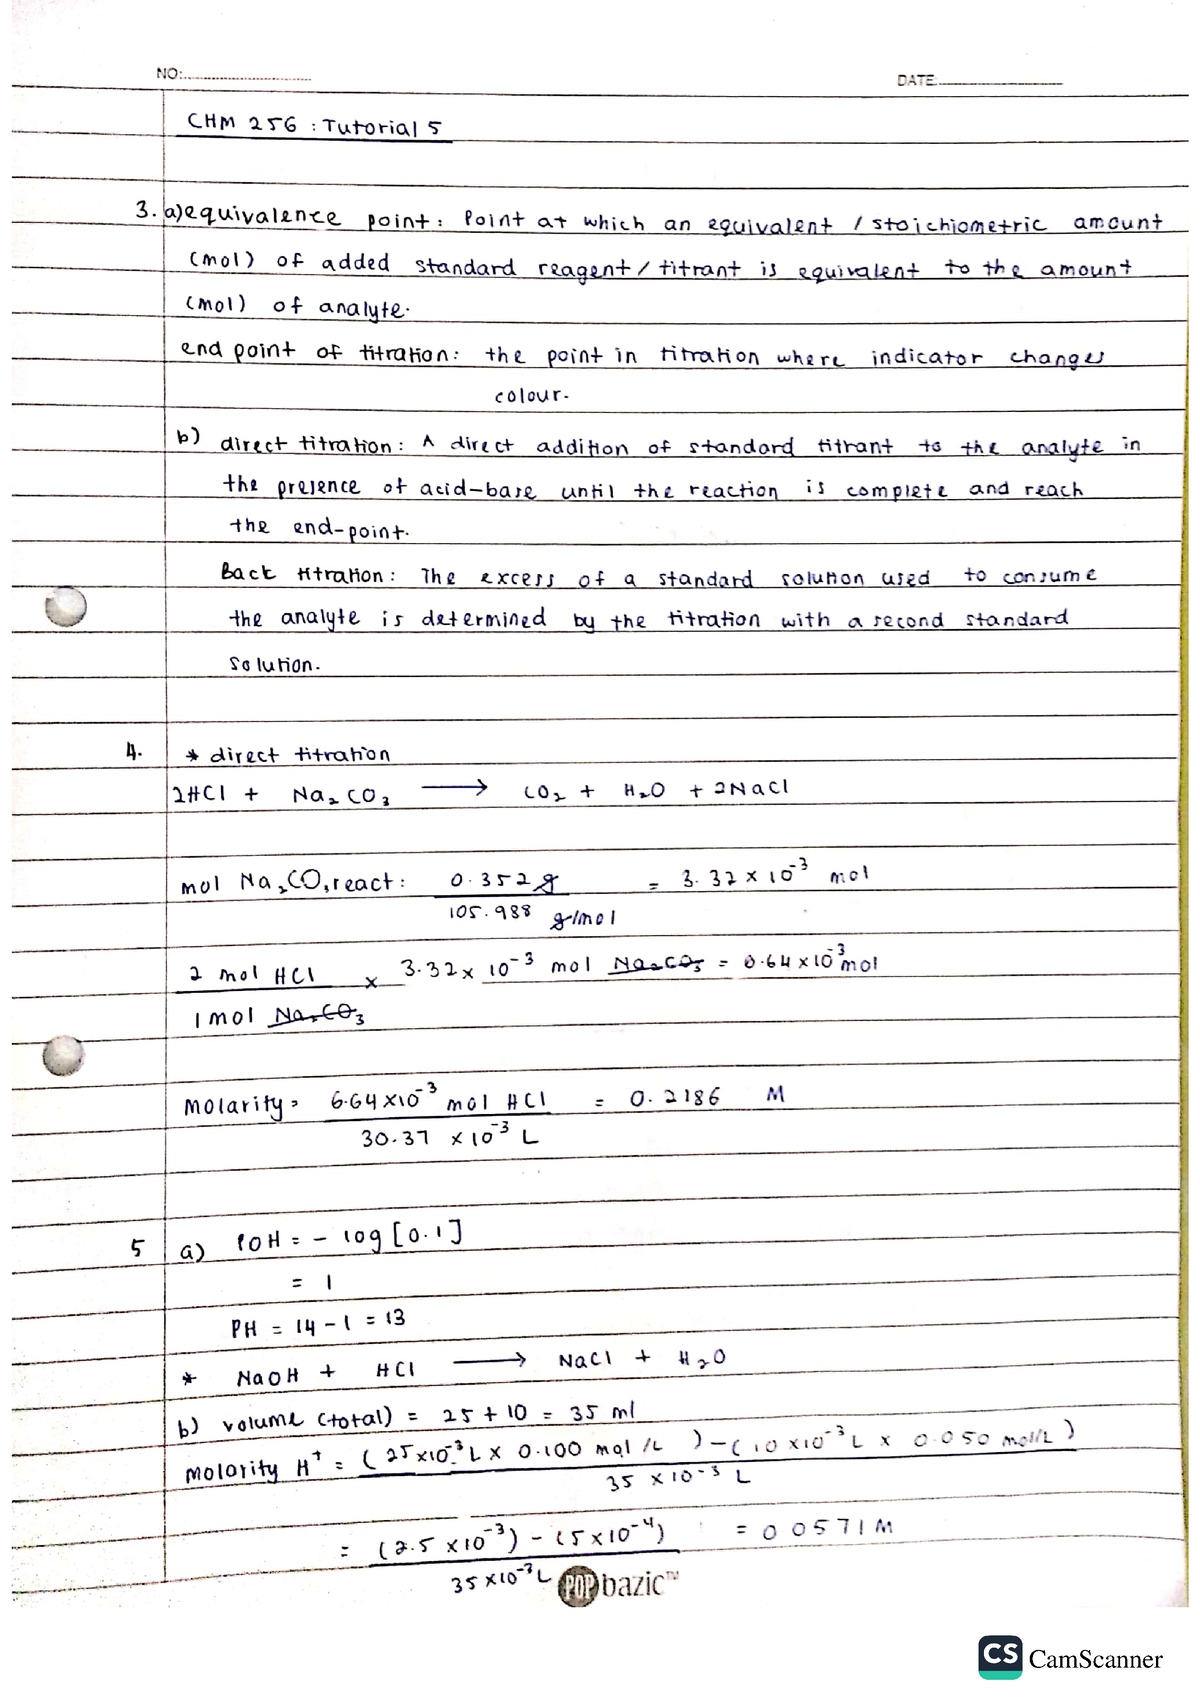 Chm256 Tutorial 5 - Basic Analytical Chemistry - Studocu